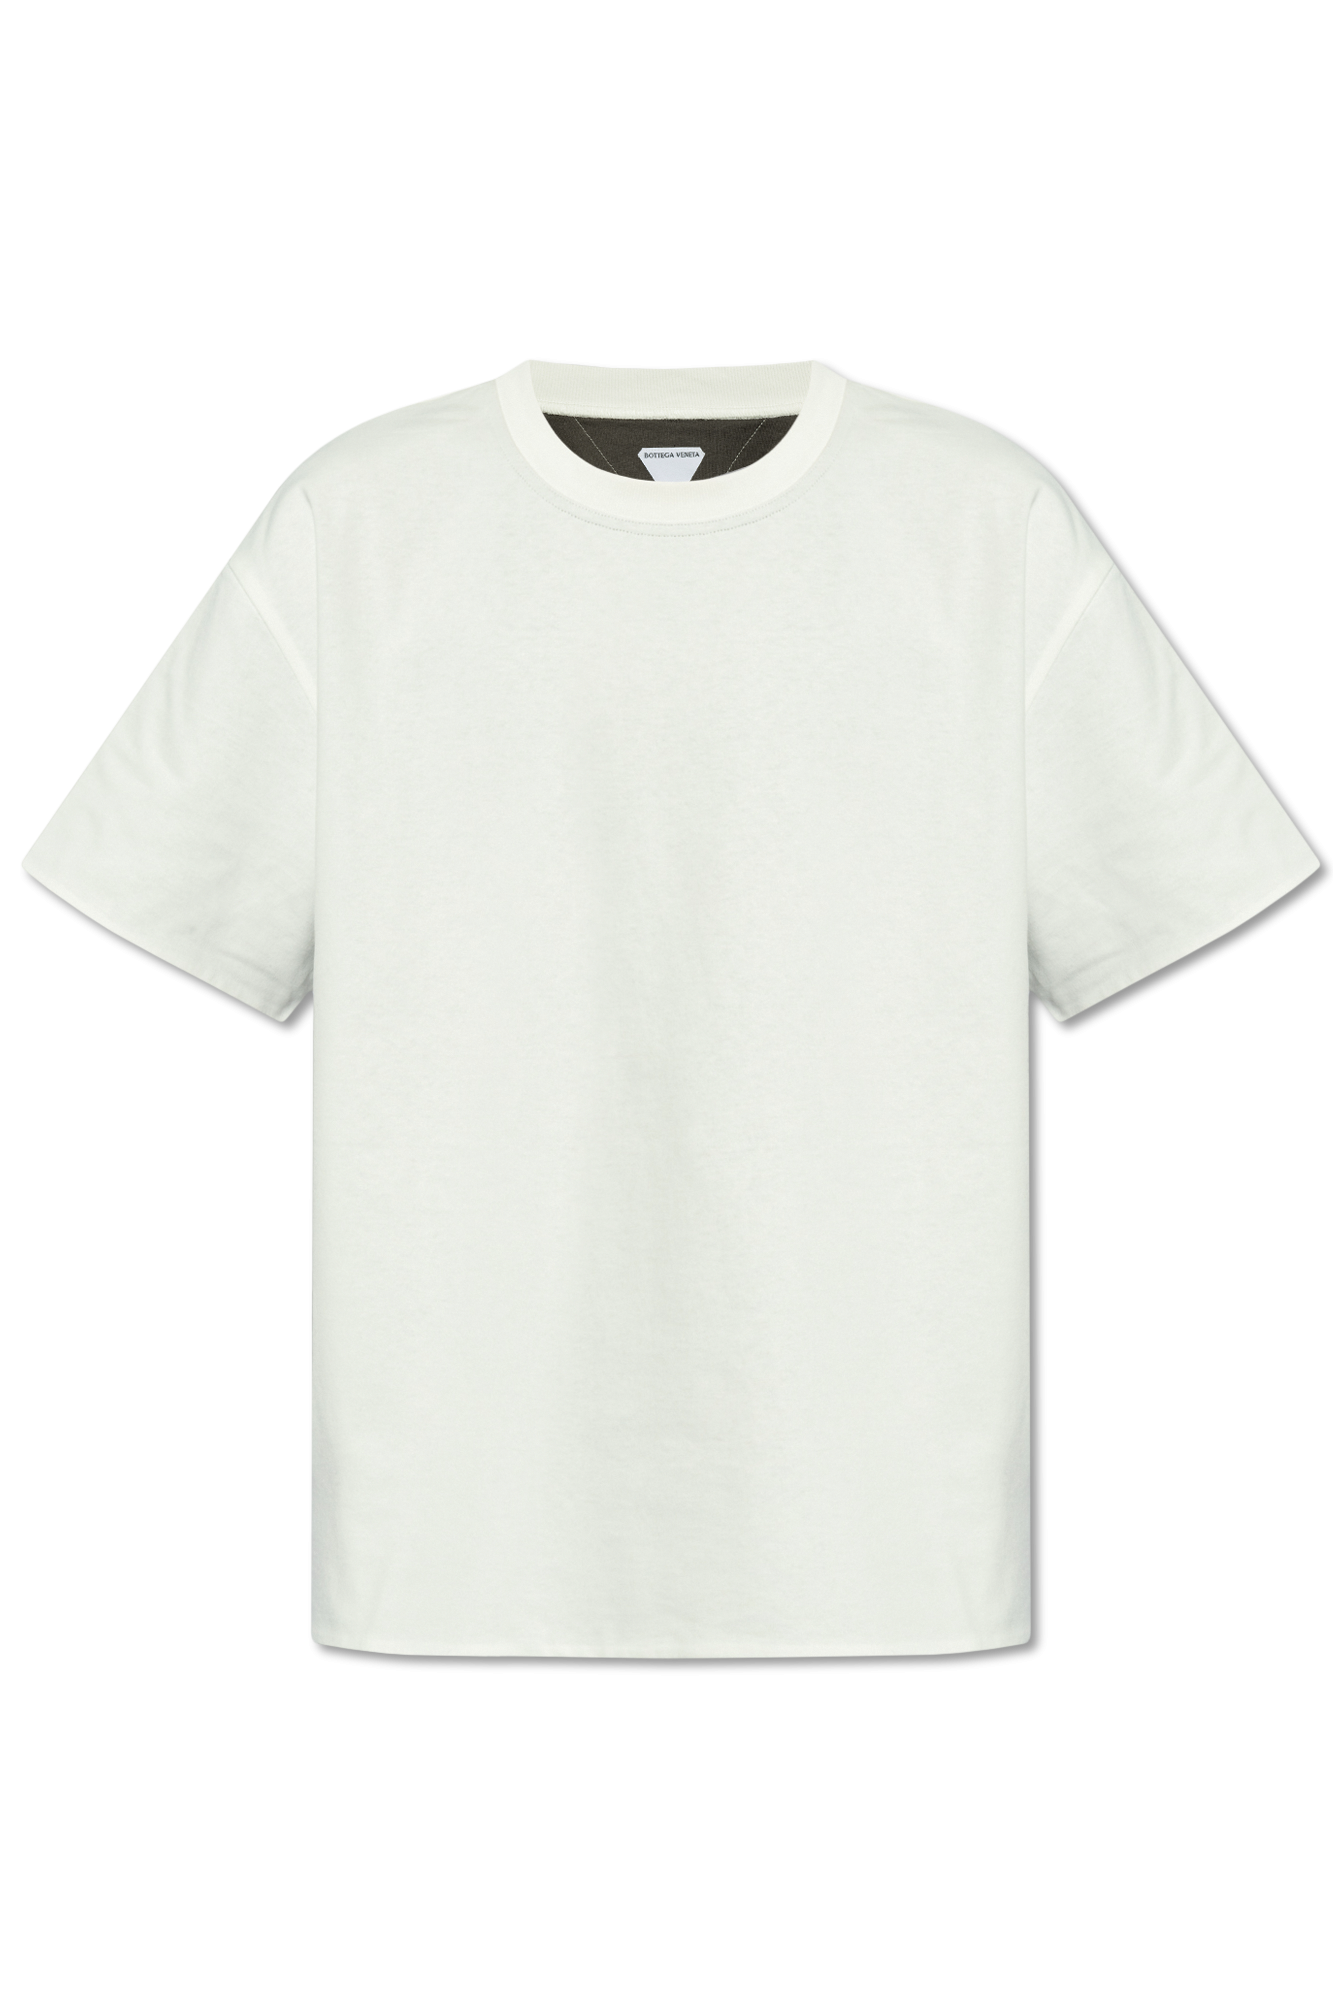 bottega espadrilles Veneta Cotton T-shirt